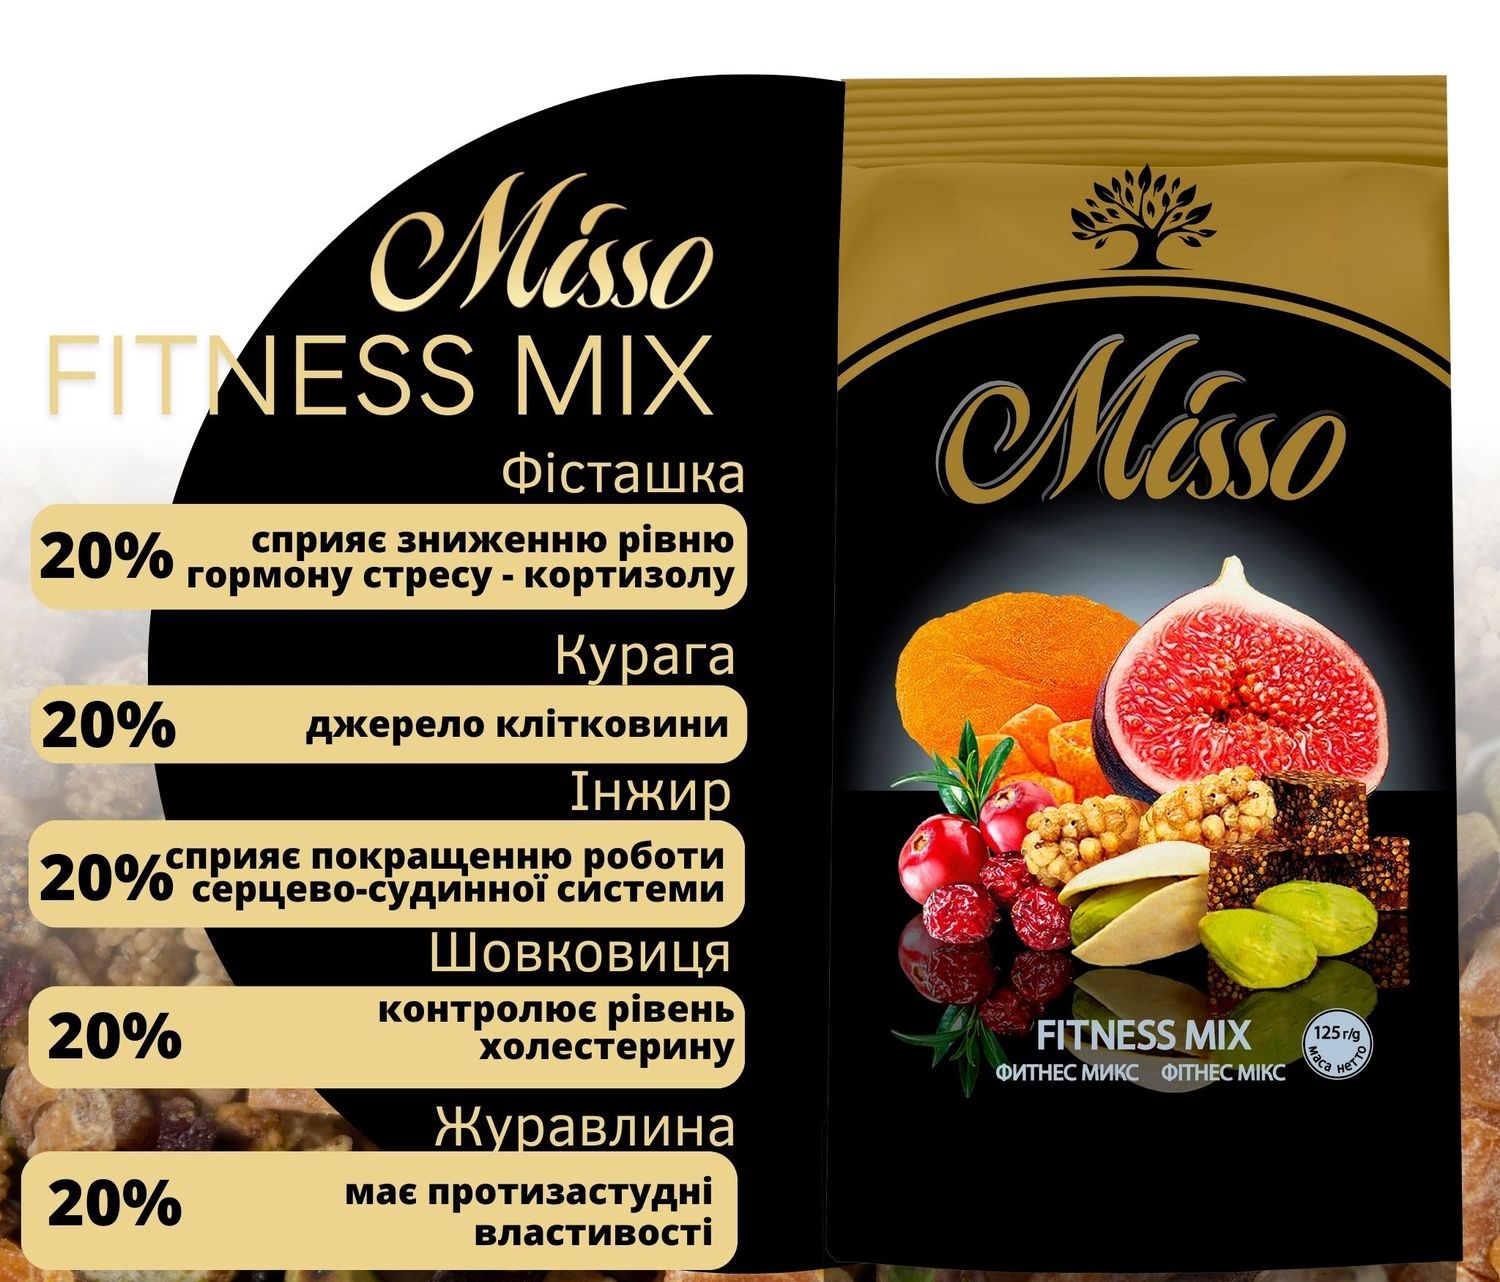 Ассорти сушеных ягод и ядер фисташки Misso Fitness Mix 125 г - фото 3